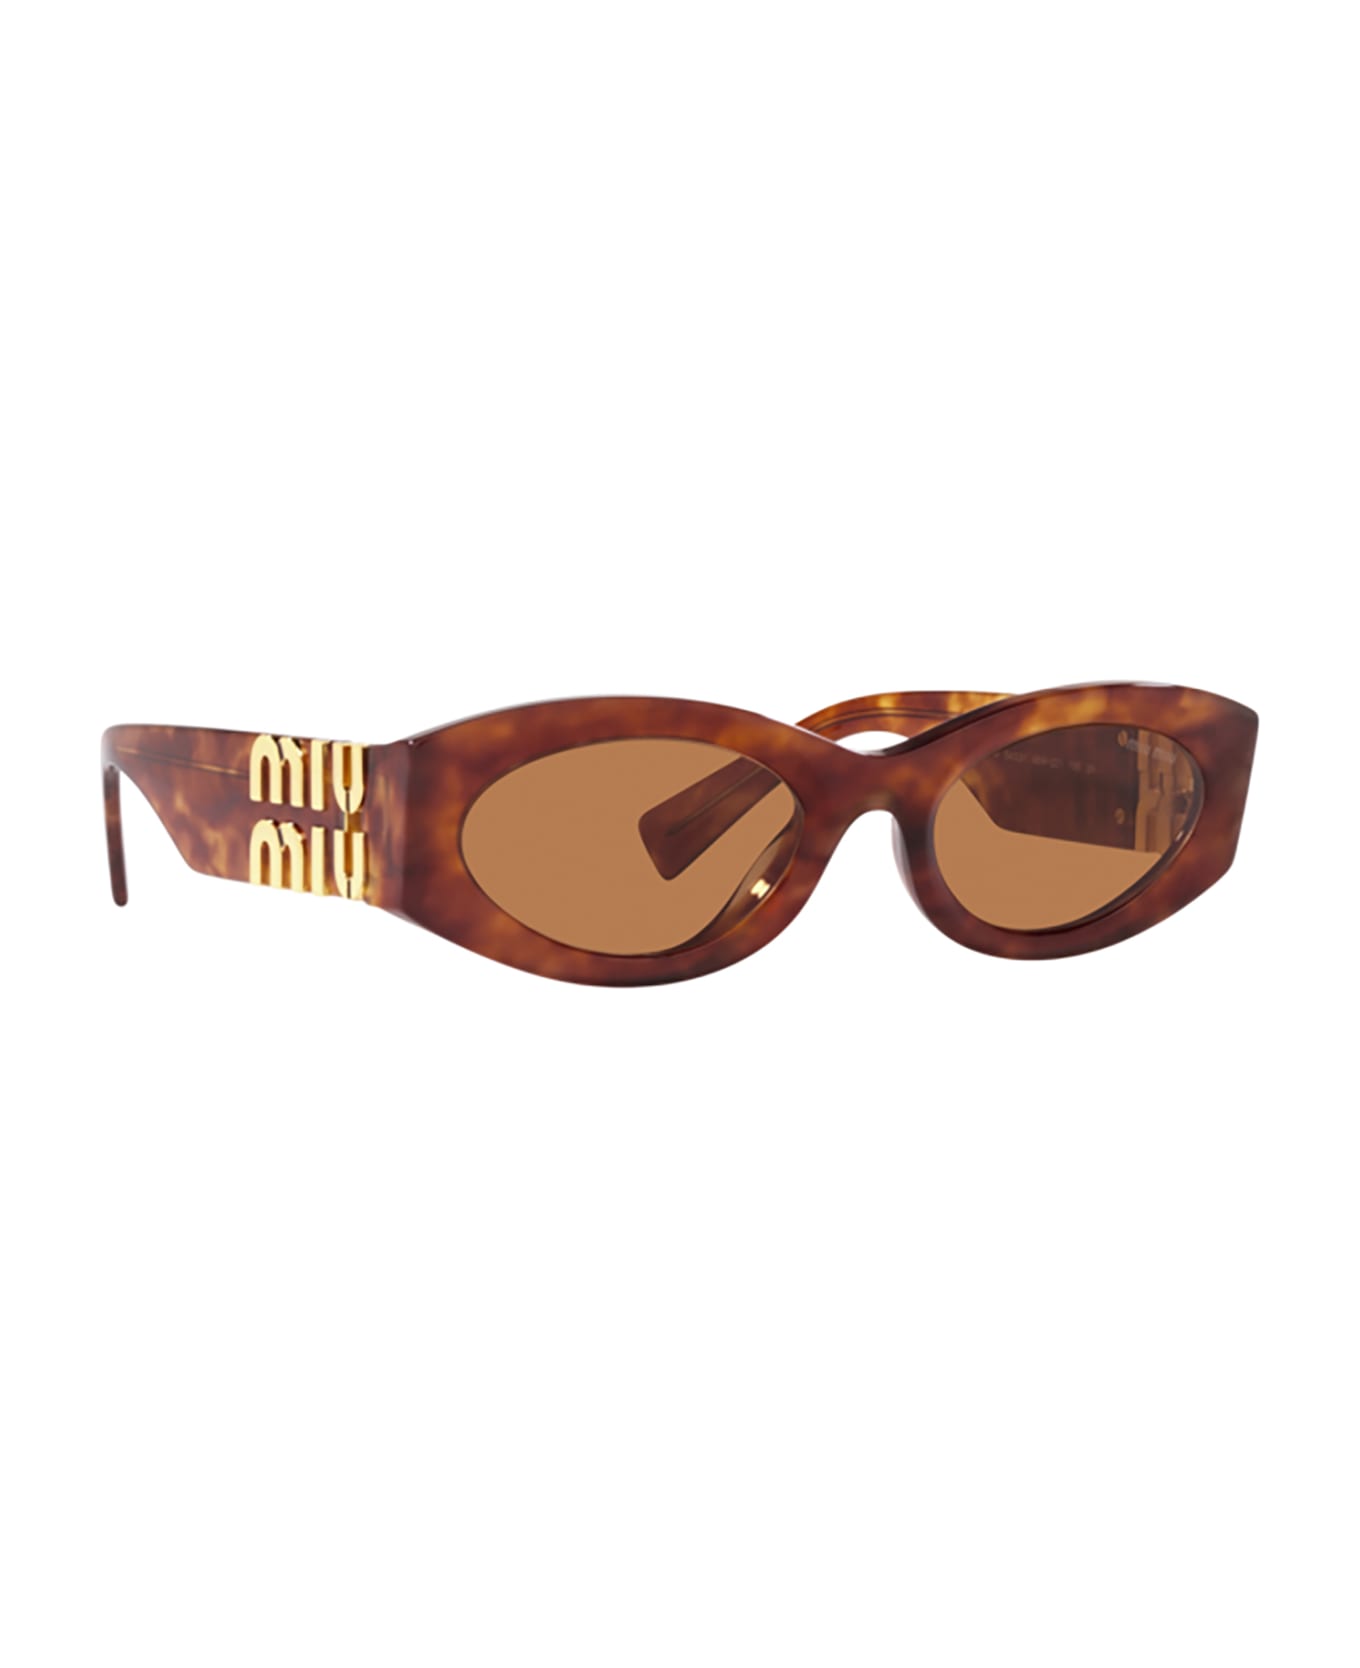 Miu Miu Eyewear Mu 11ws Havana Sunglasses - Havana